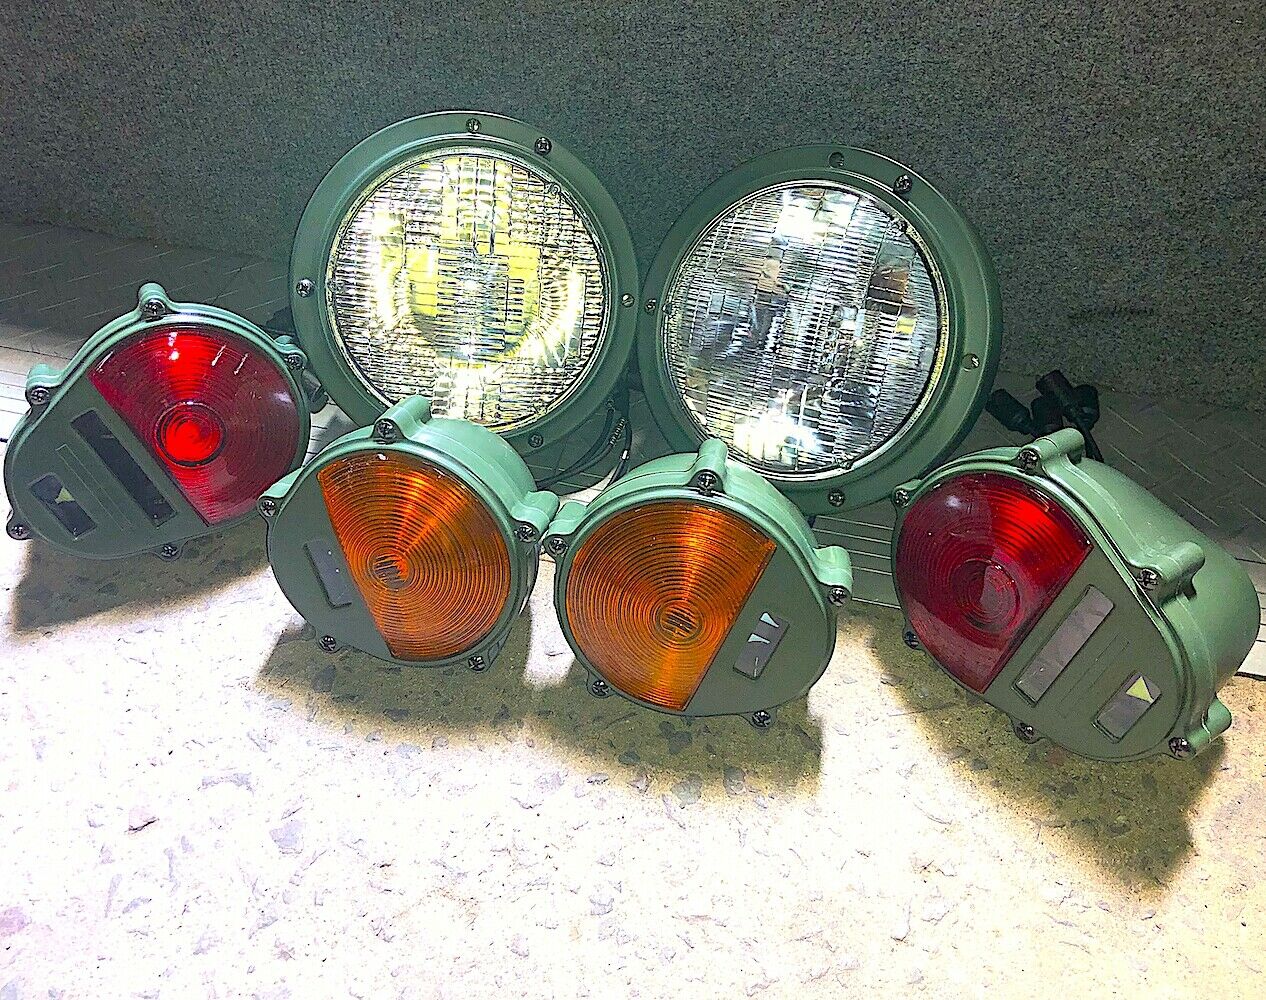 Set of 2 - Headlight Asm., 2 - Taillights, & 2 - Parking Lights  M939  M35  M998